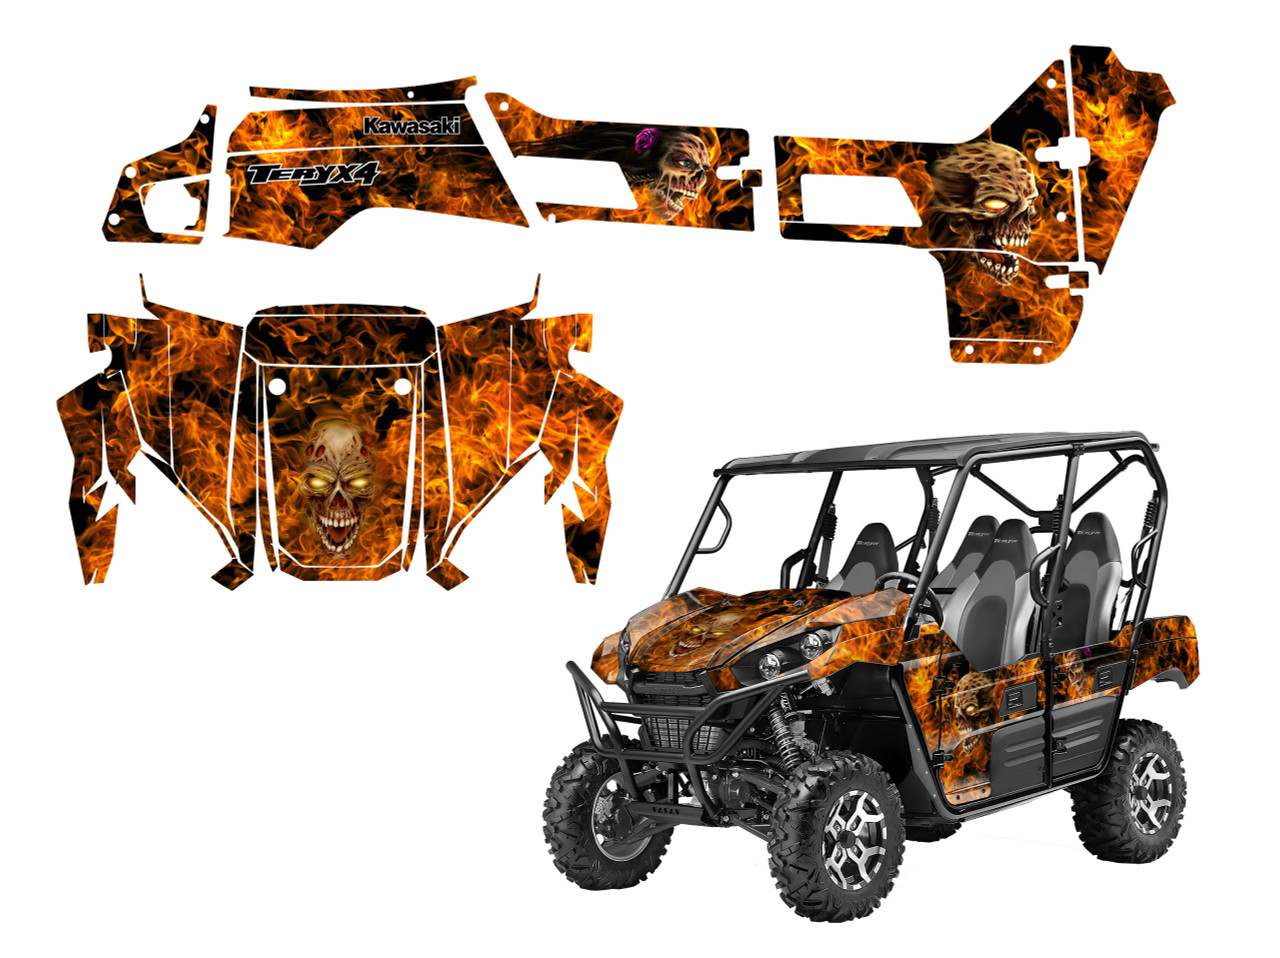 2008 Kawasaki Teryx side by side graphics with Zombie Skulls